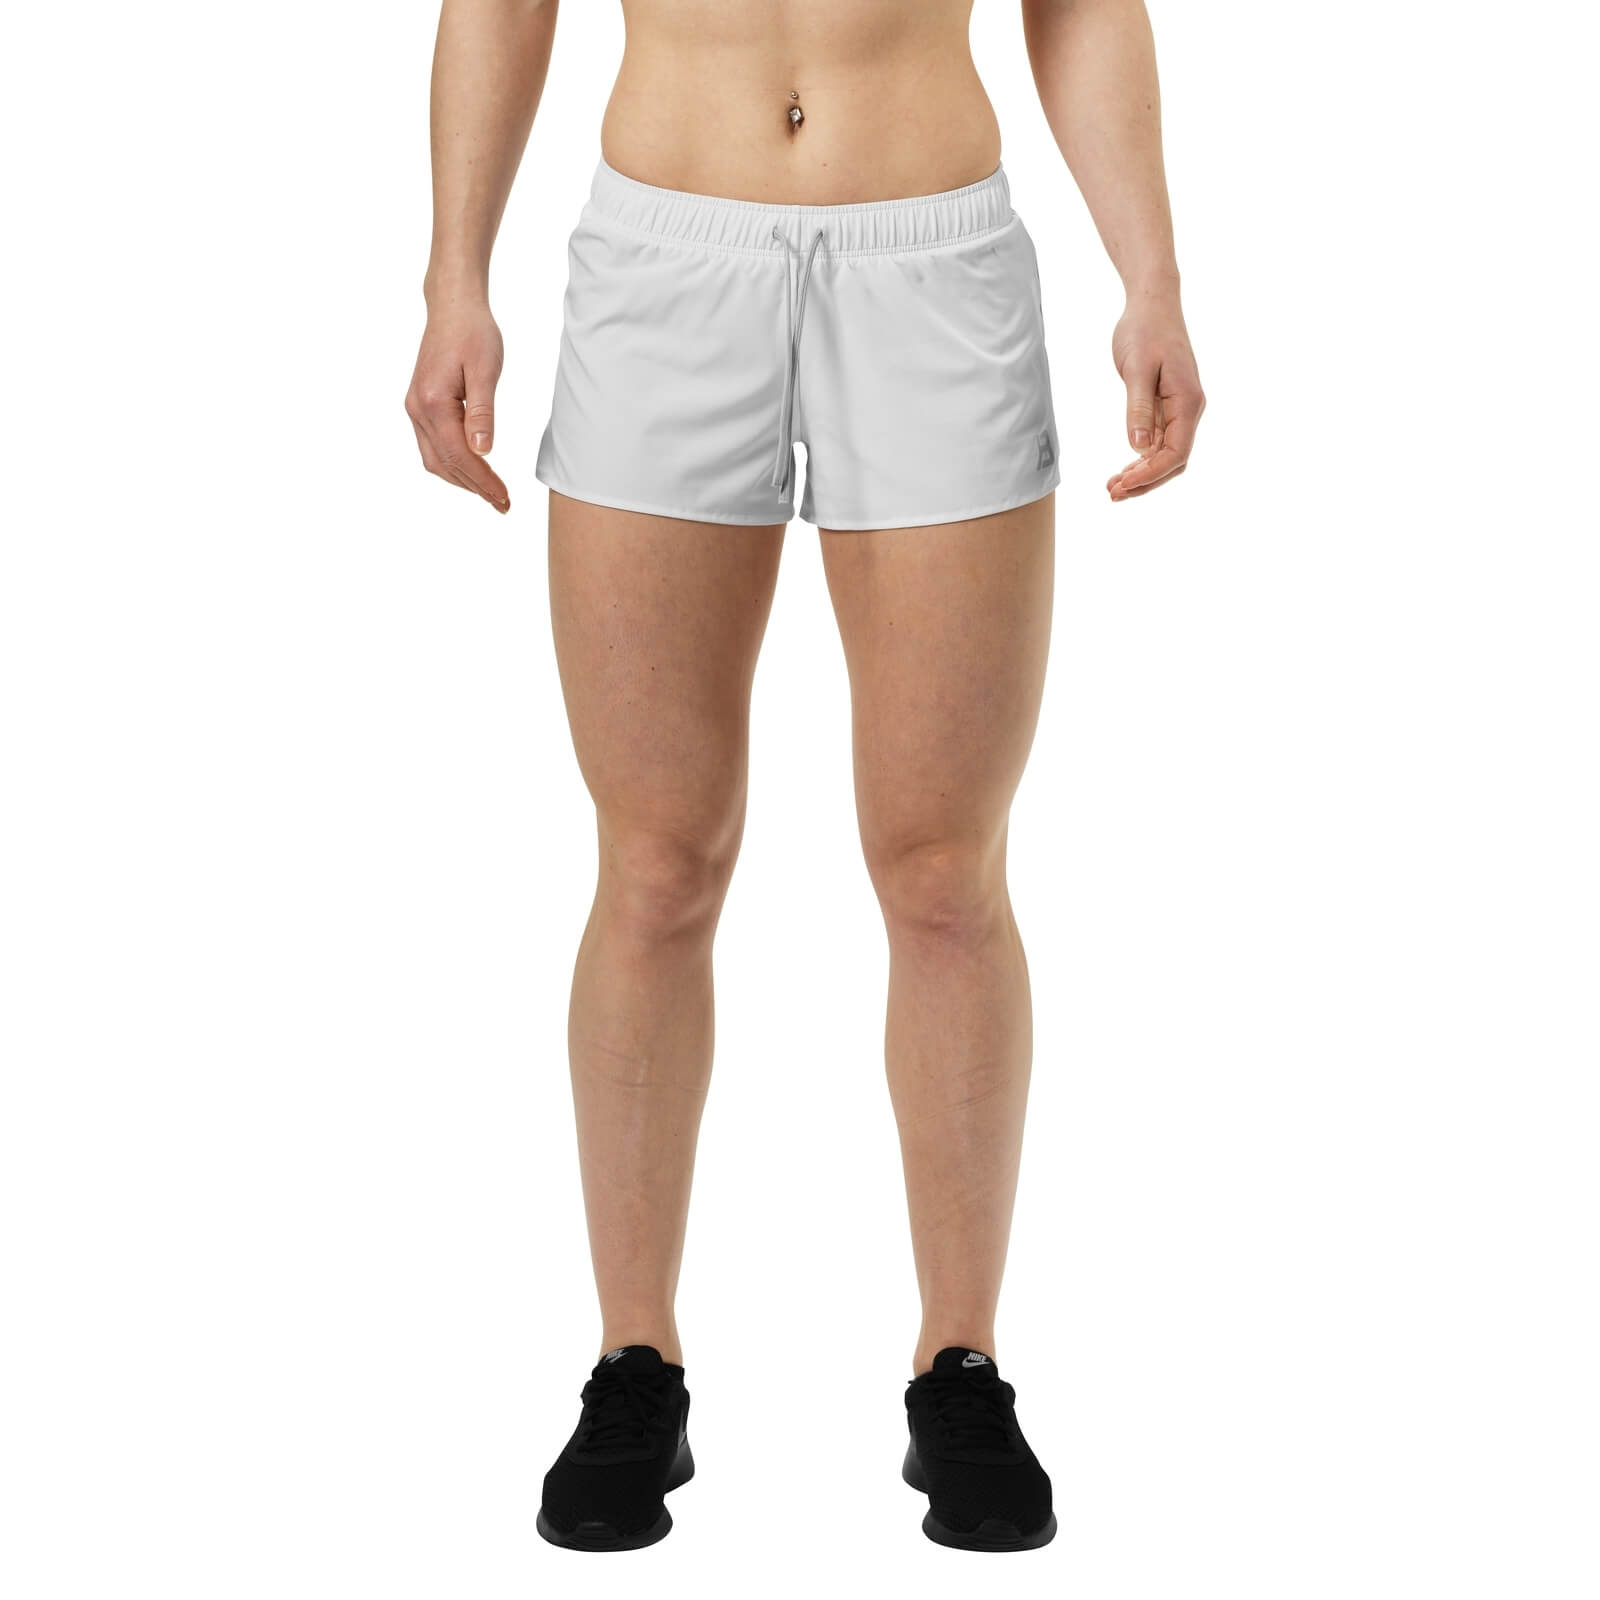 Kolla in Nolita Shorts, white, Better Bodies hos SportGymButiken.se